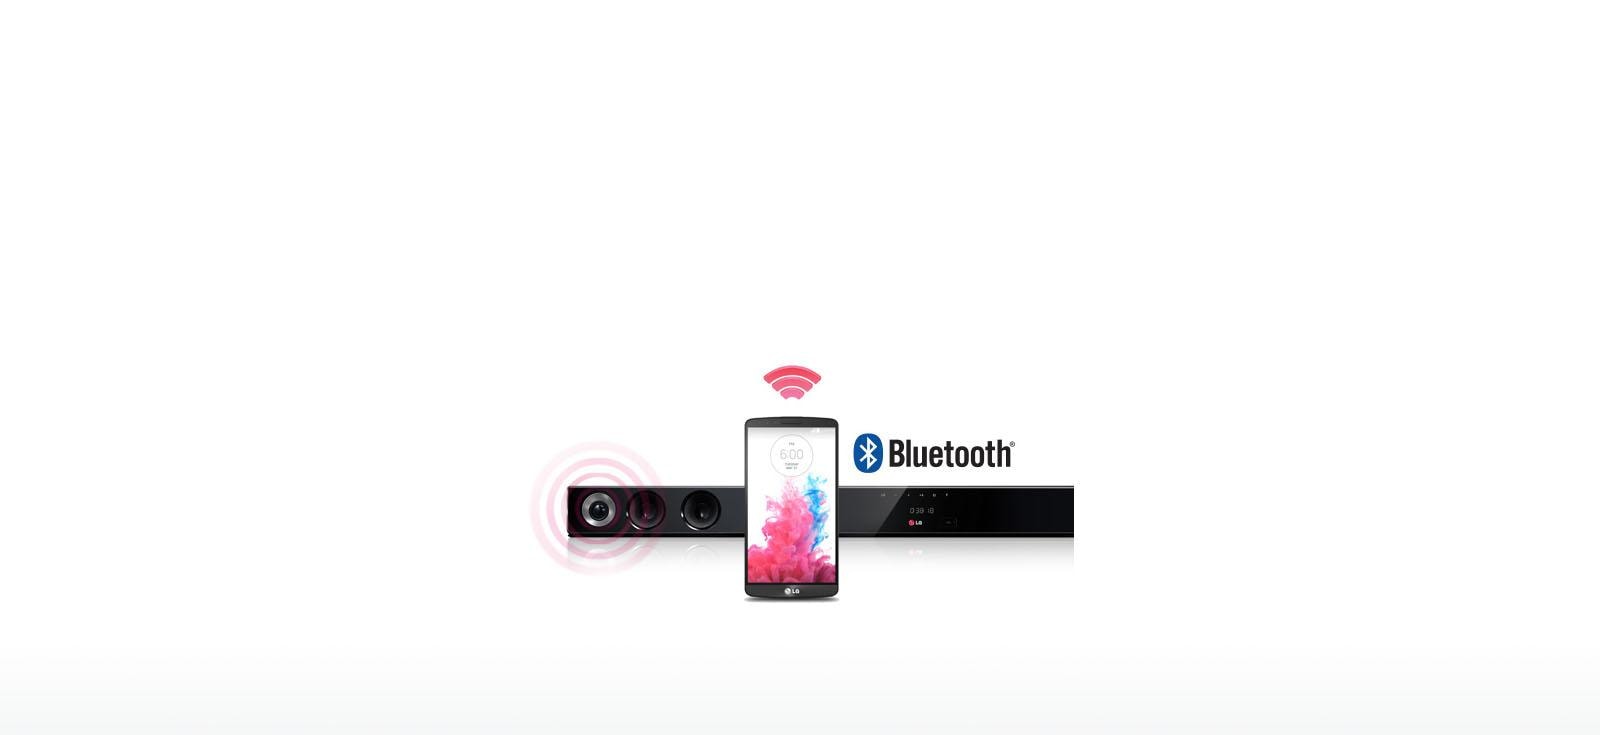 Bluetooth®